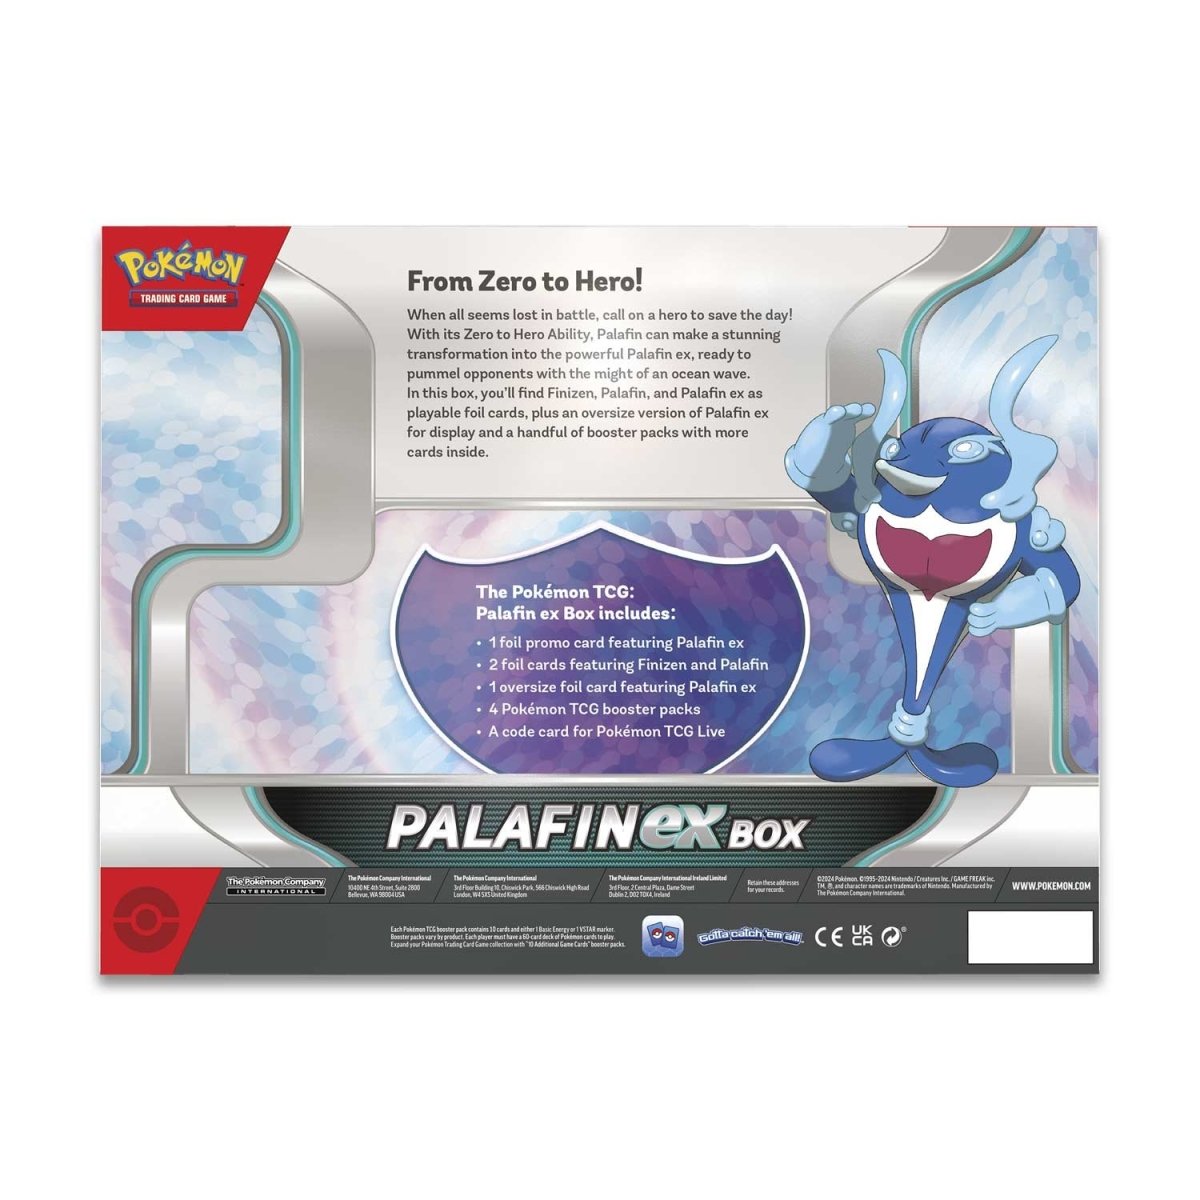 Pokemon TCG: Palafin EX Box-The Pokémon Company International-Ace Cards &amp; Collectibles